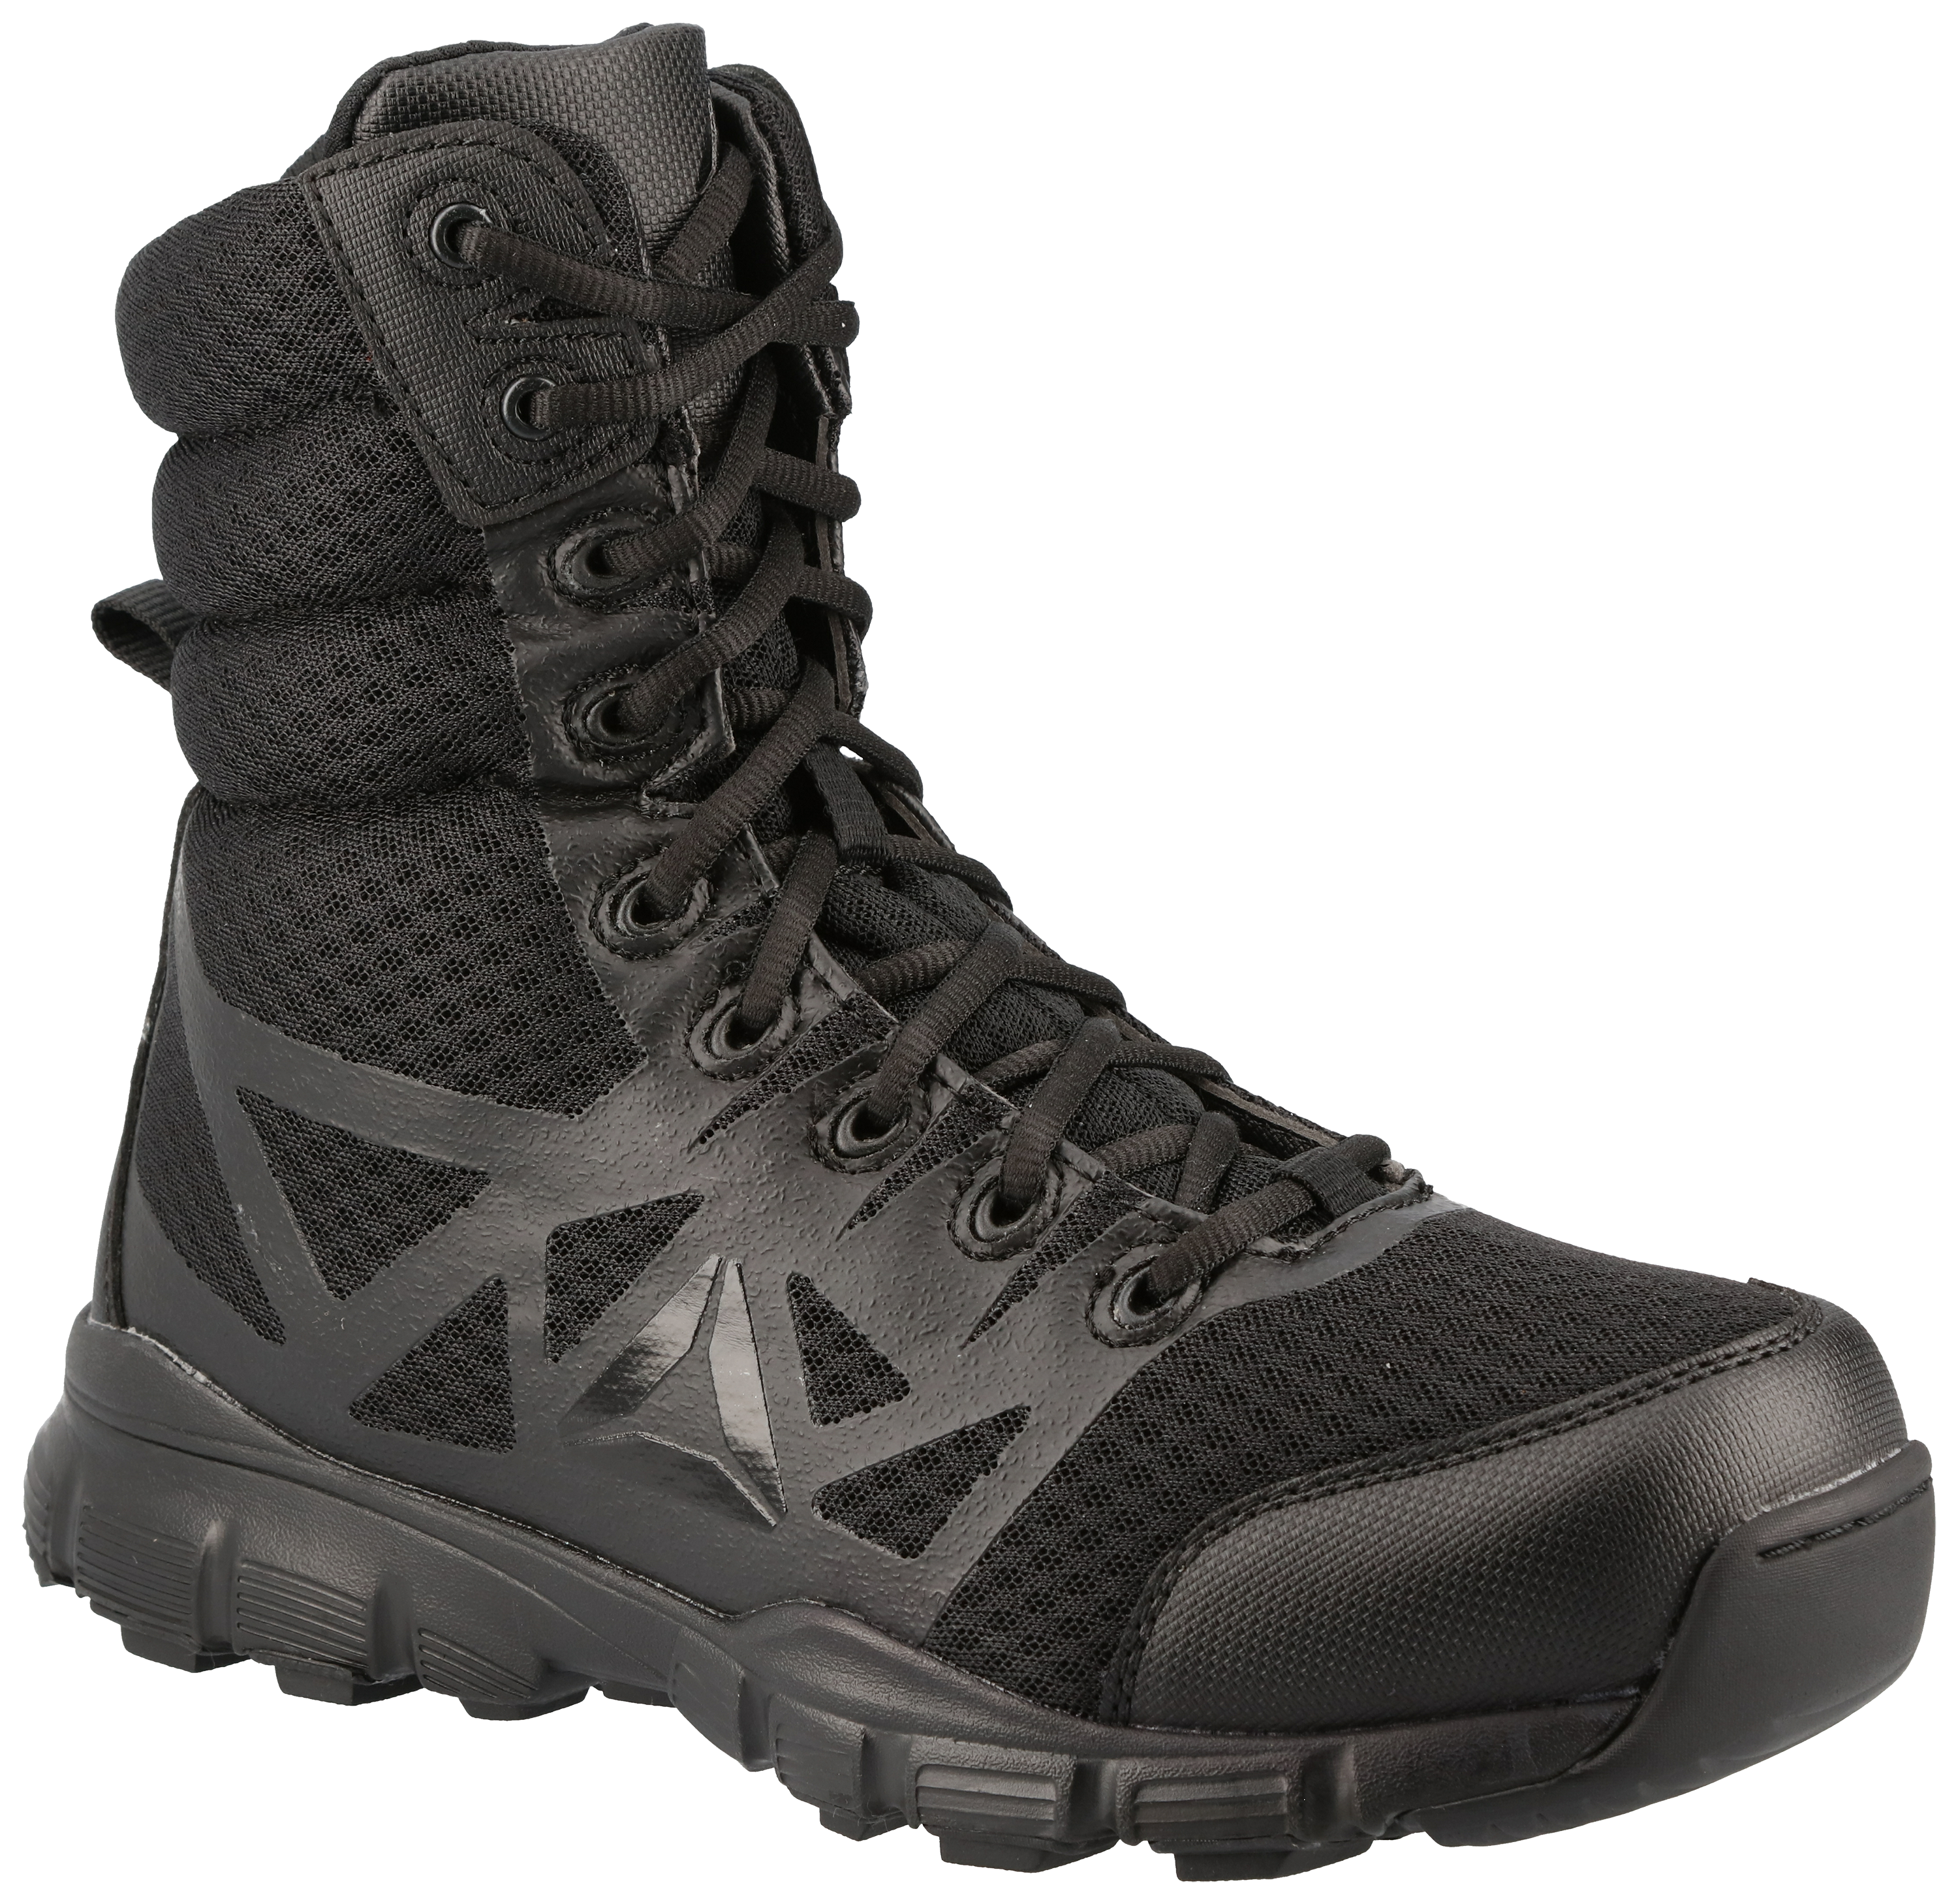 Reebok Dauntless Ultra-Light 8' Side-Zip Tactical Boots for Men - Black - 9.5W